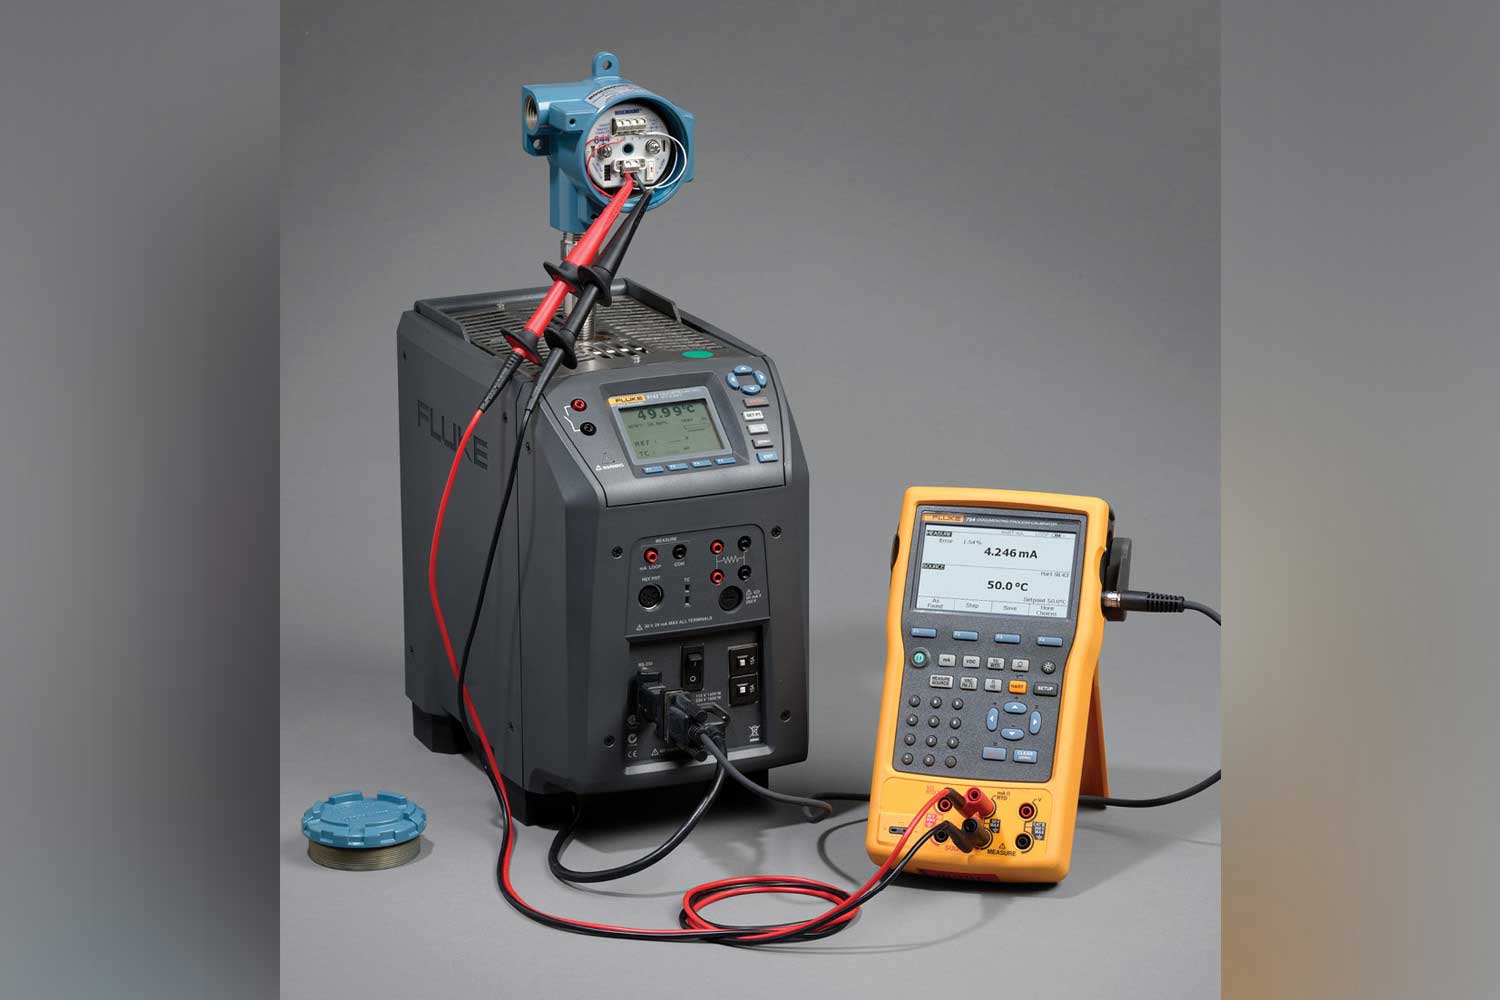 Temperature Transmitter (RTD) Loop Checks Procedure - DCS